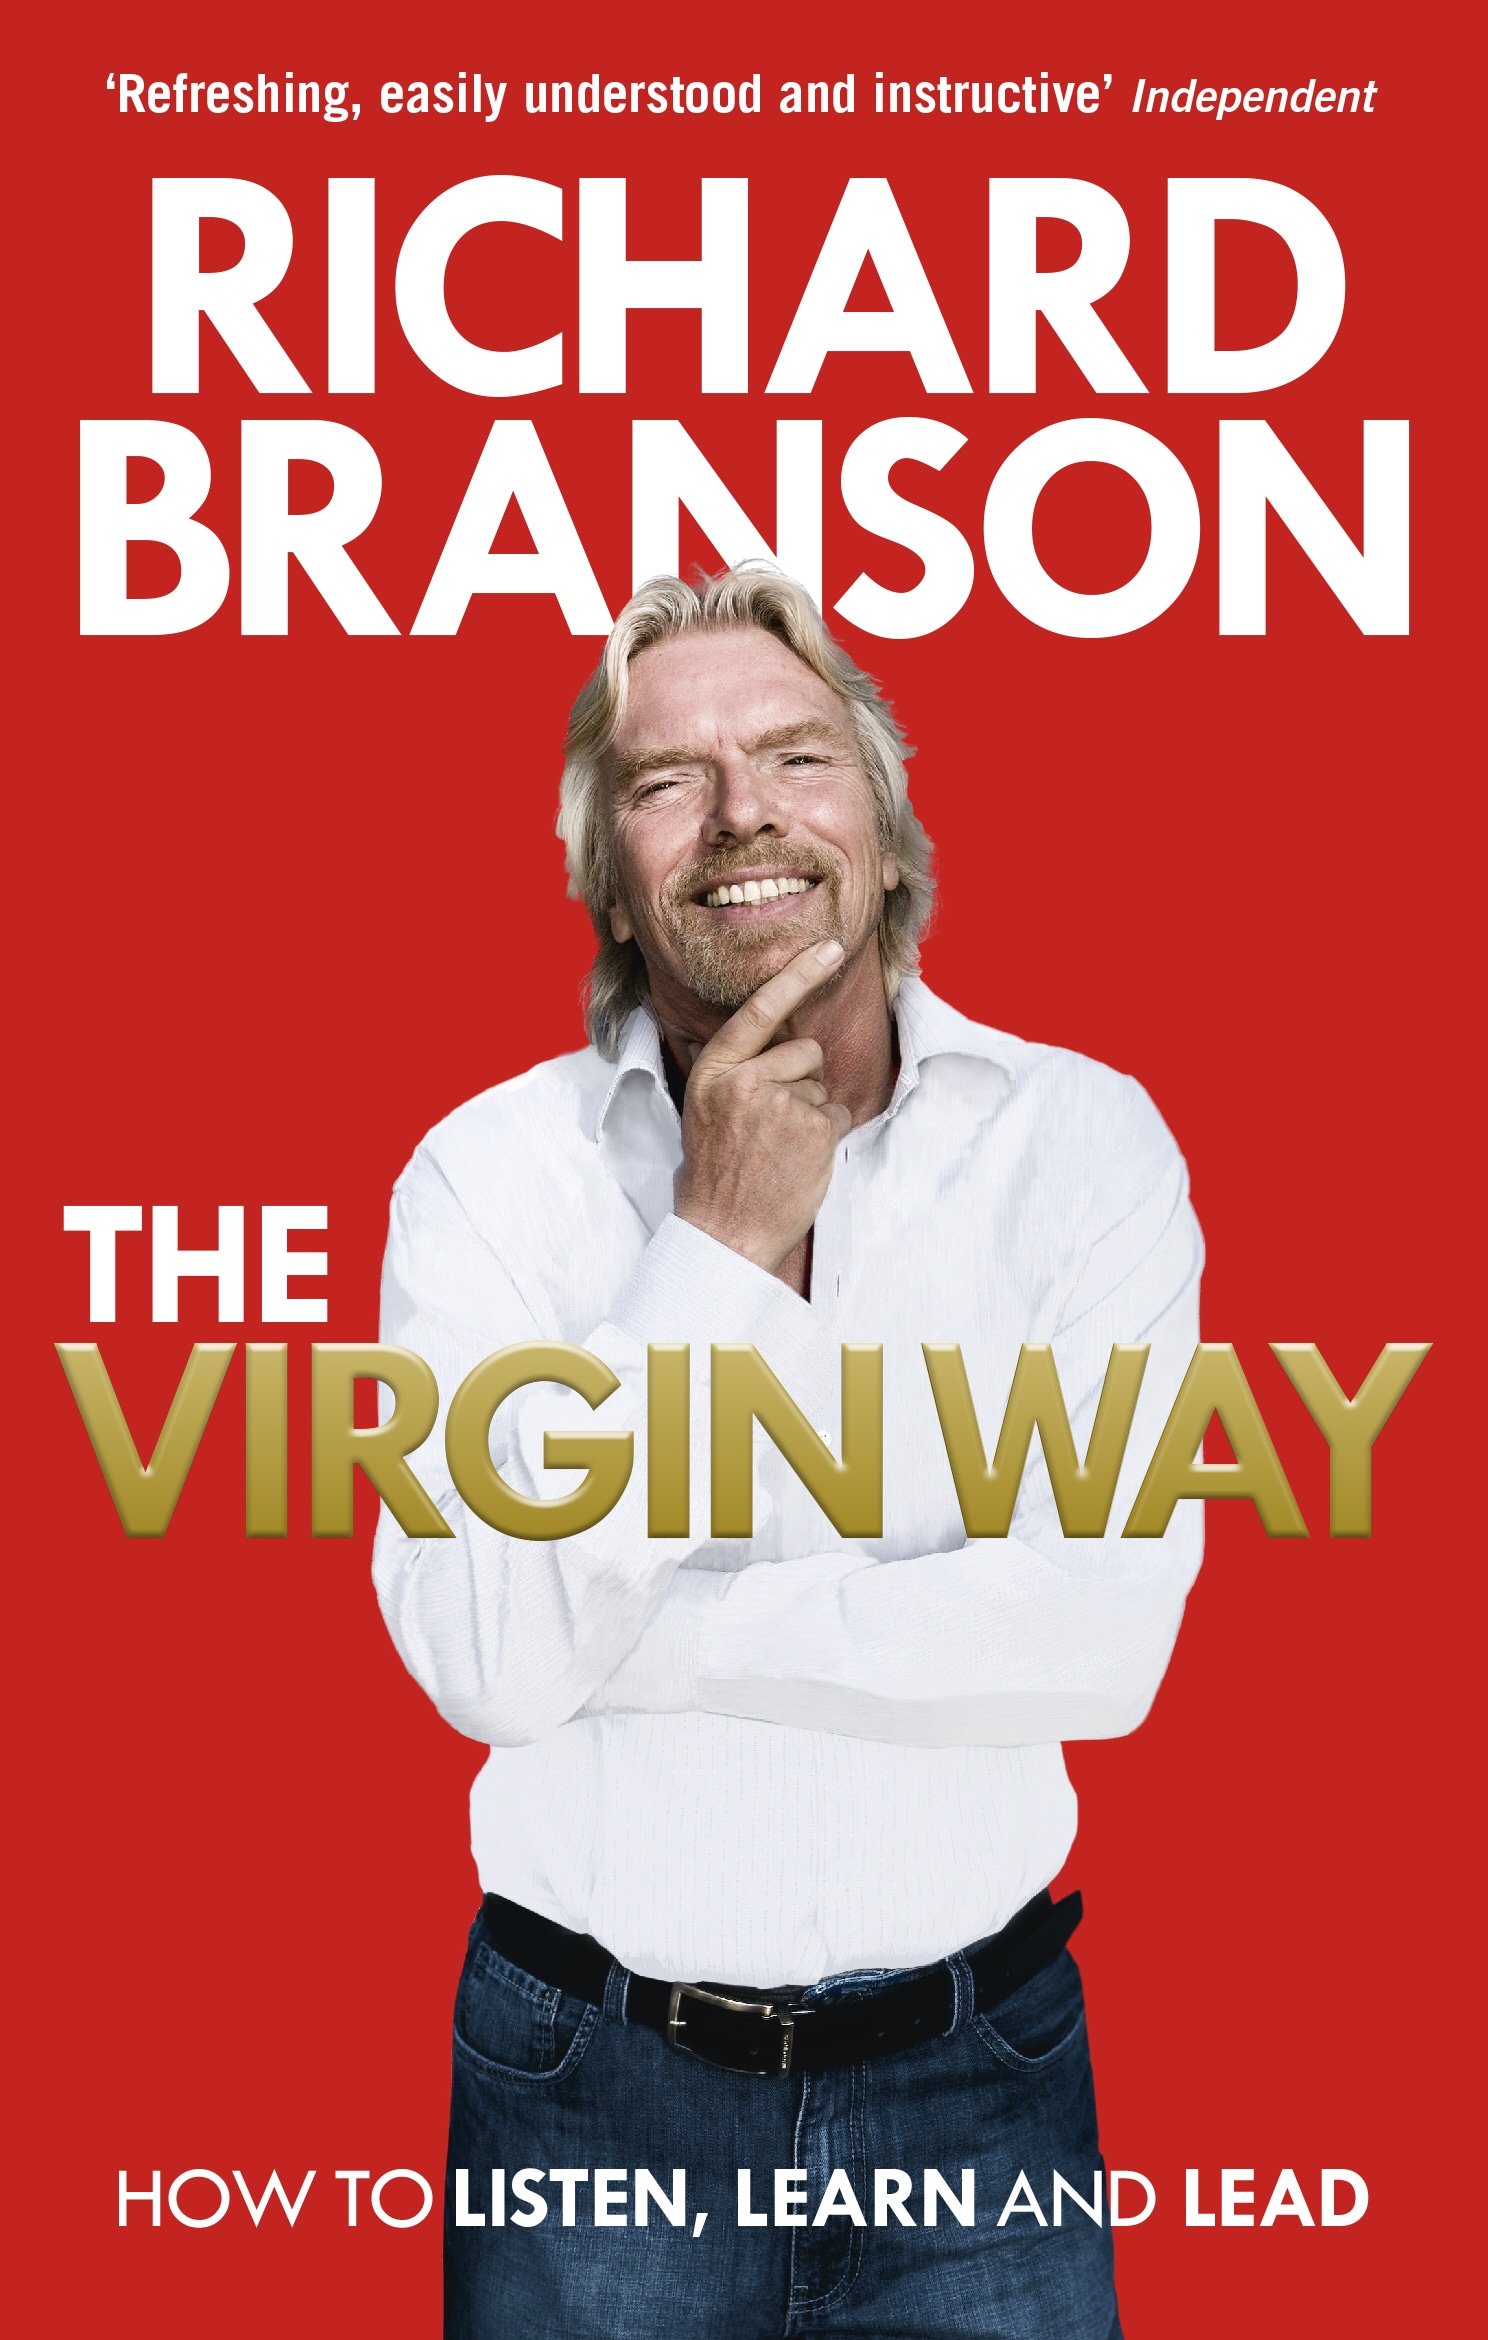 Book “The Virgin Way” by Sir Richard Branson — July 16, 2015